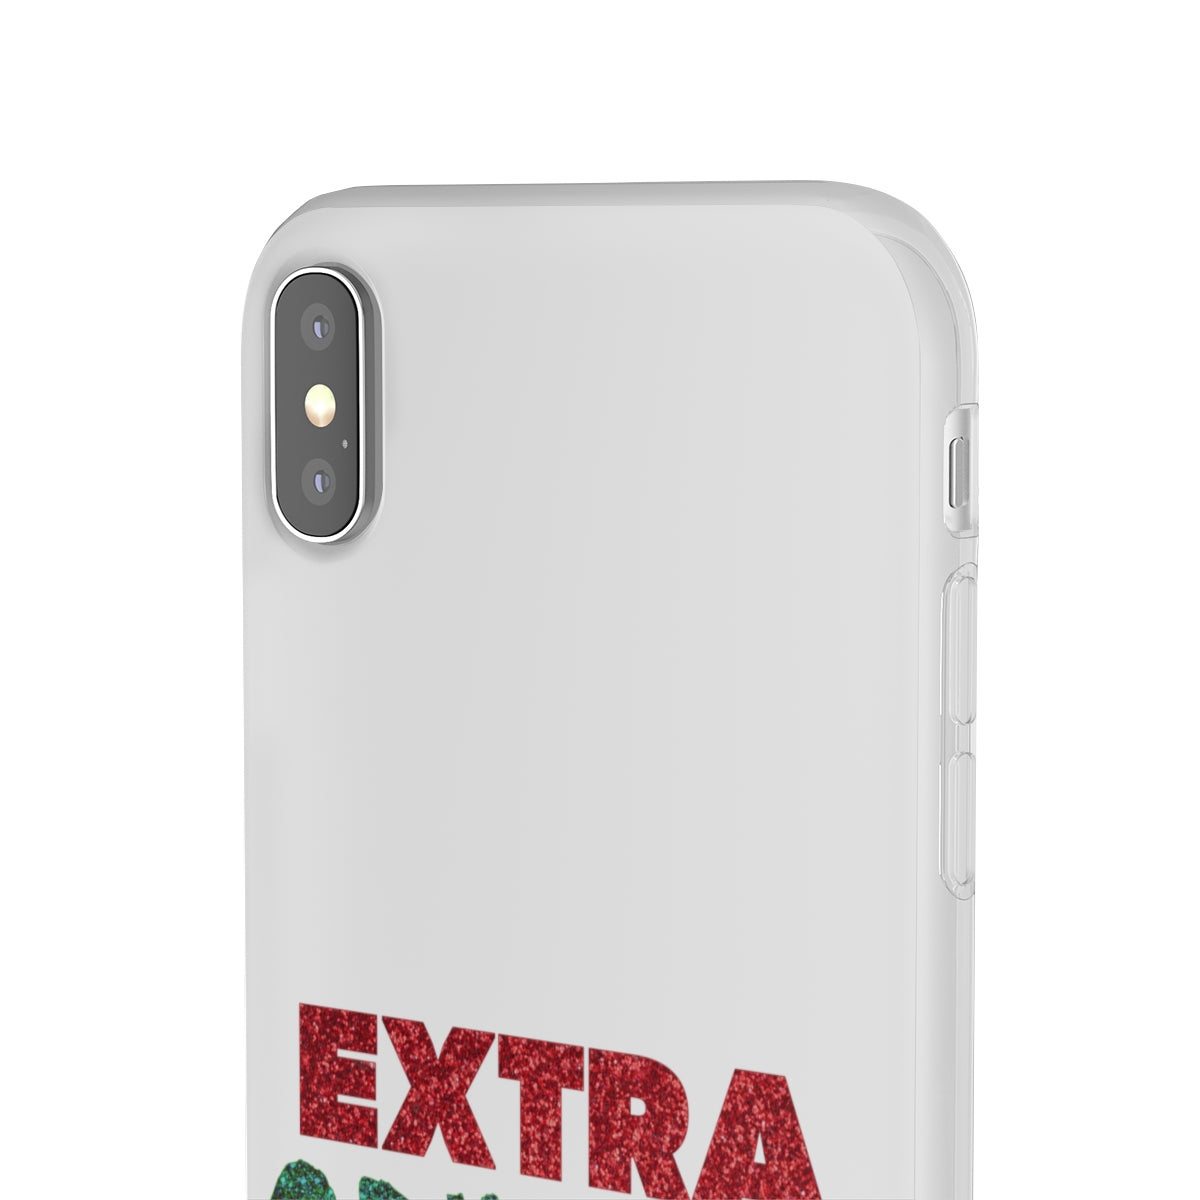 Extra Grinchy Phone Case